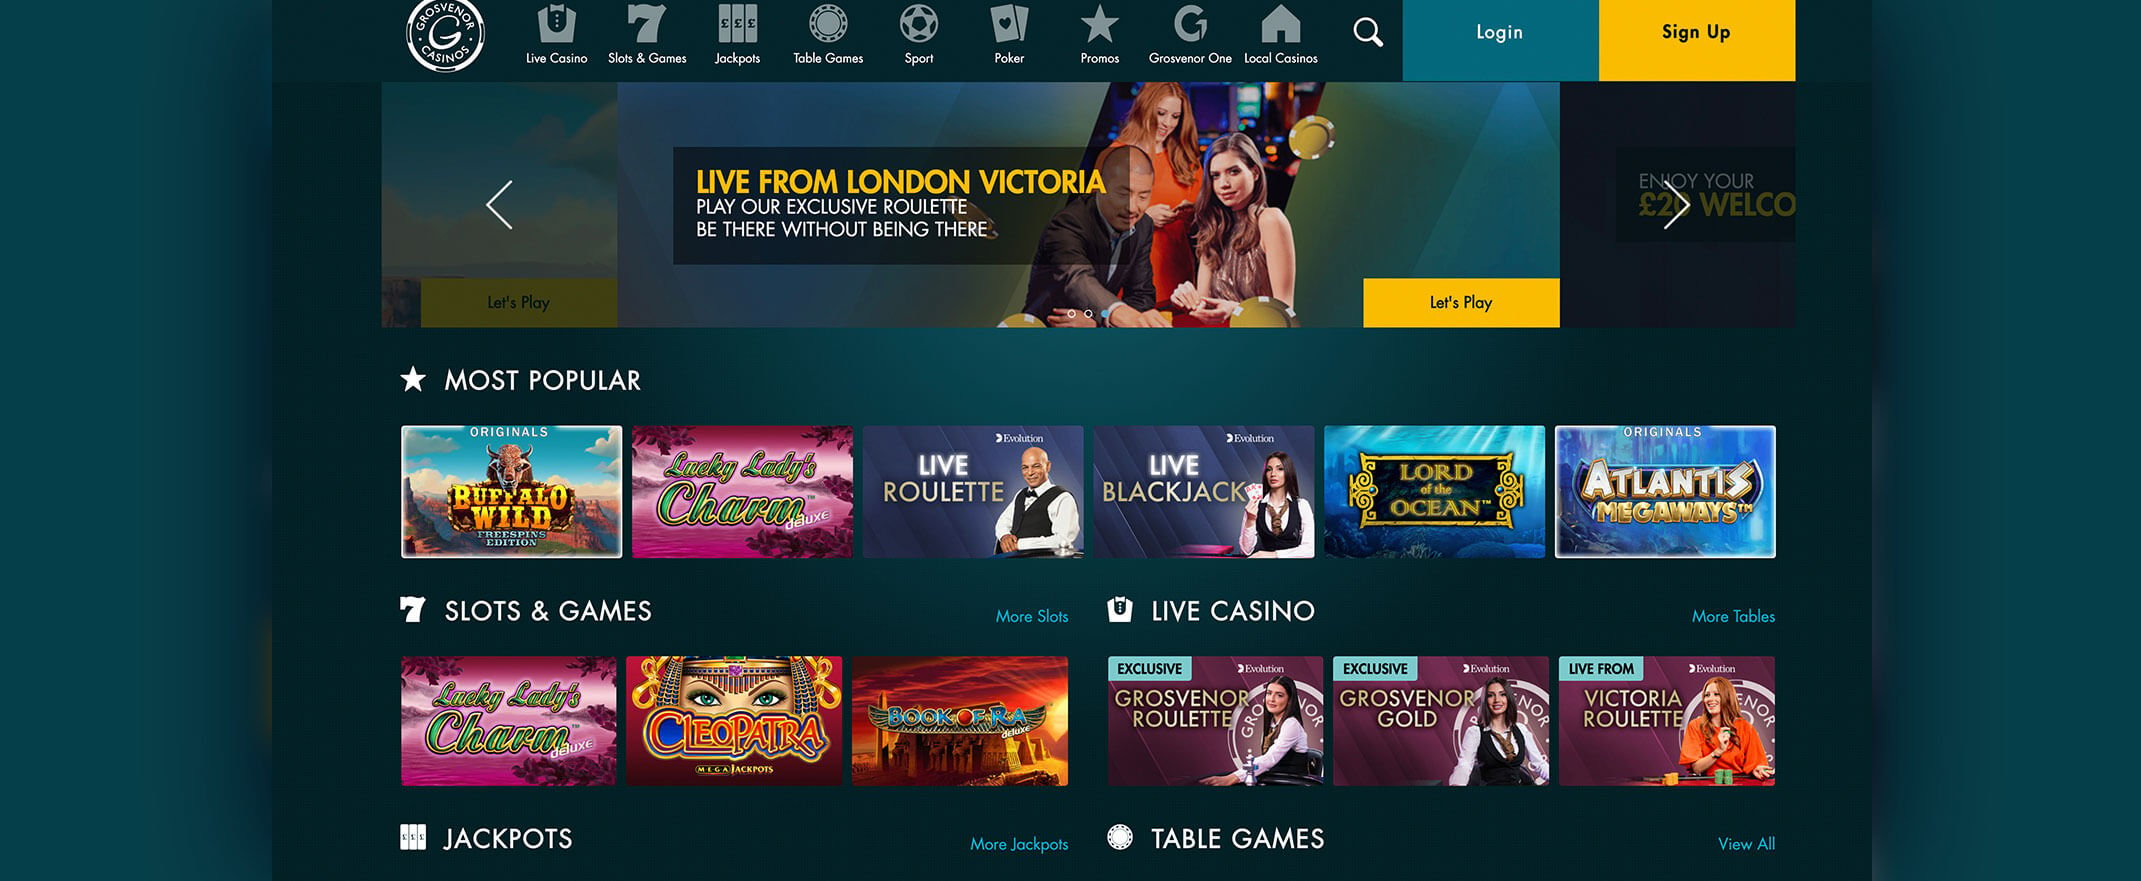 Grosvenor Casinos Homepage Screenshot